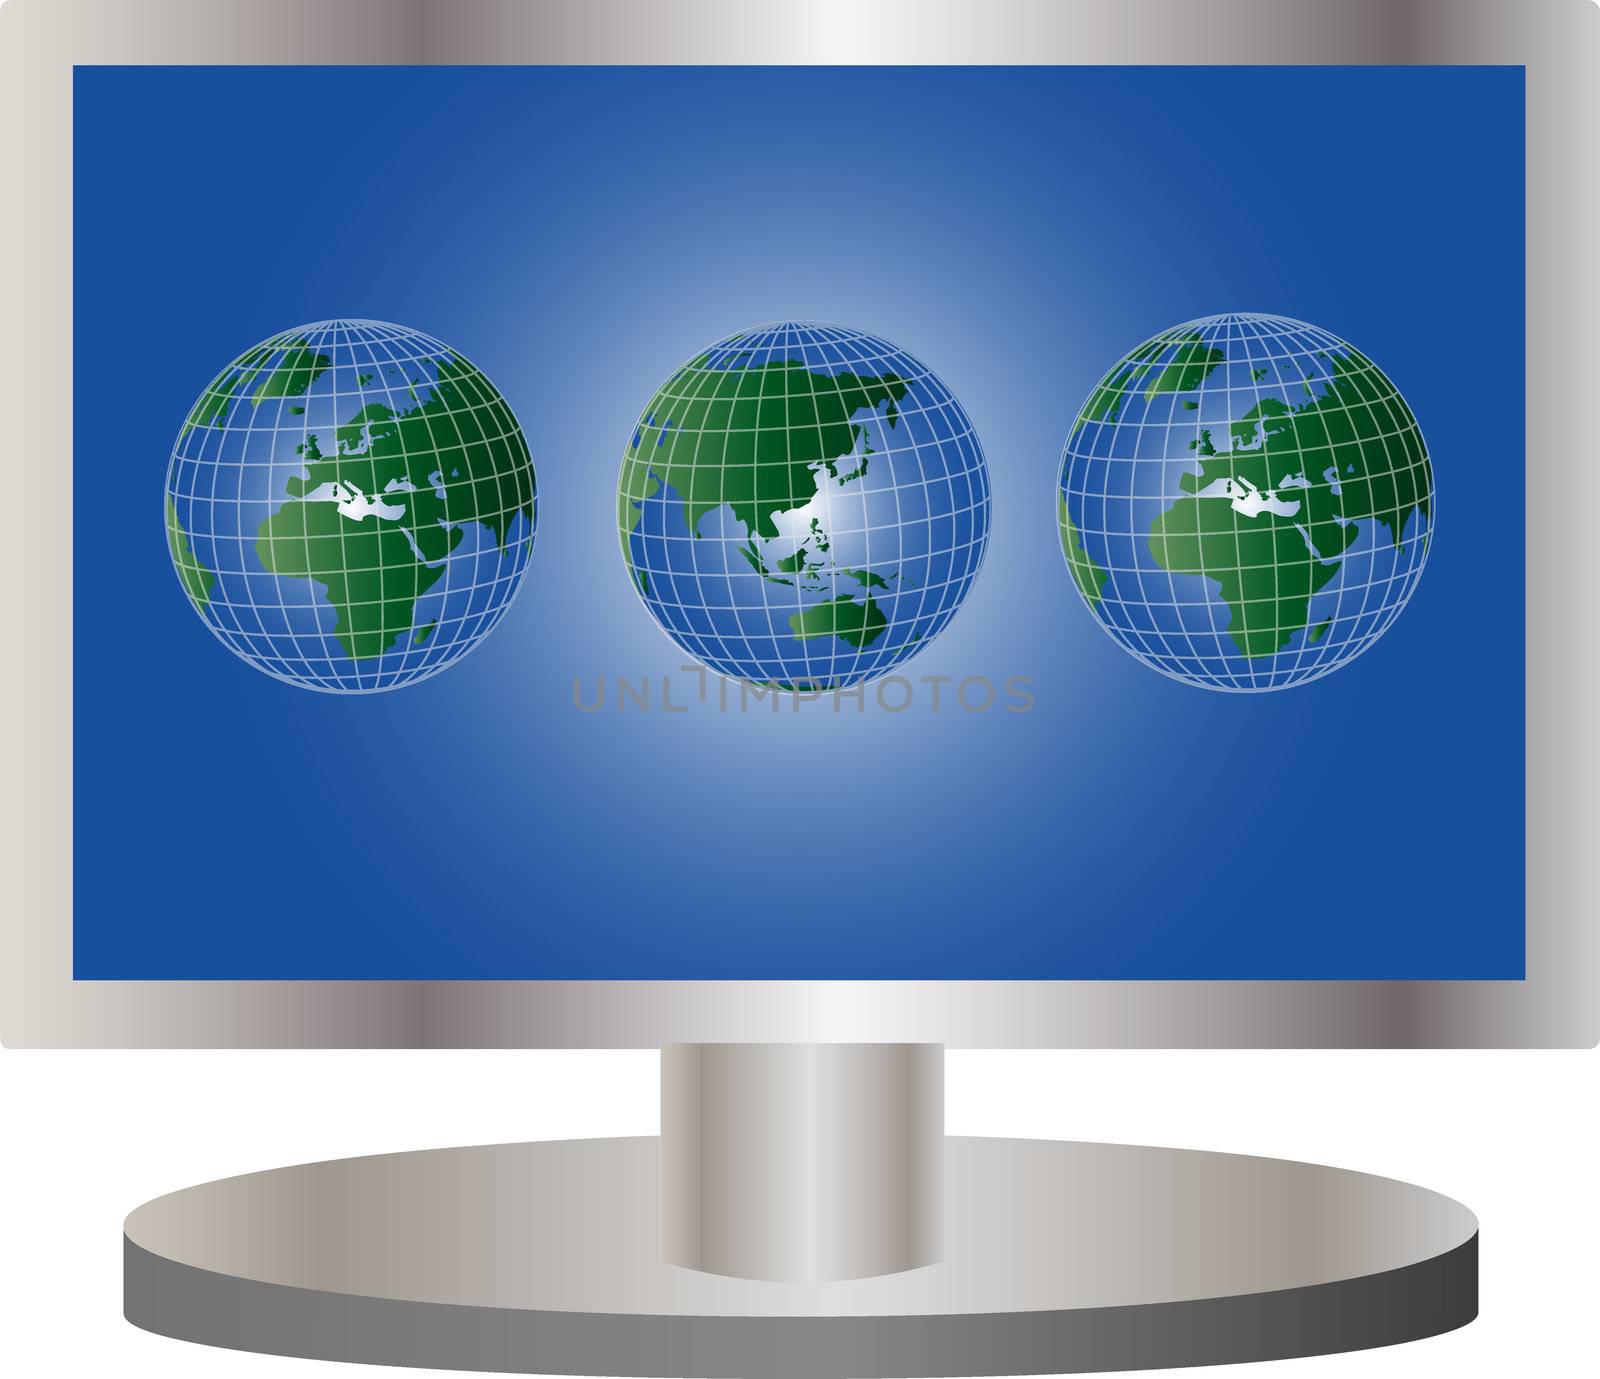 silver plasma tv with globe by peromarketing